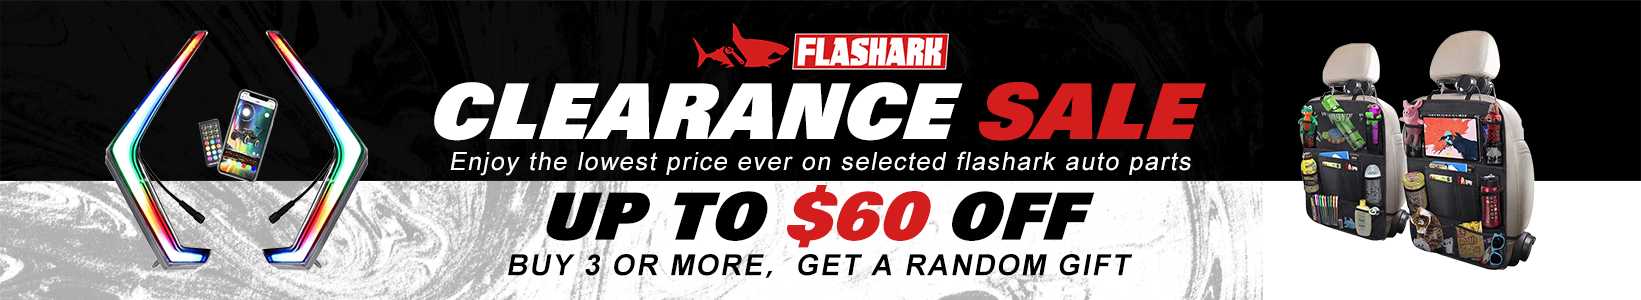 Clearance Sale Flashark